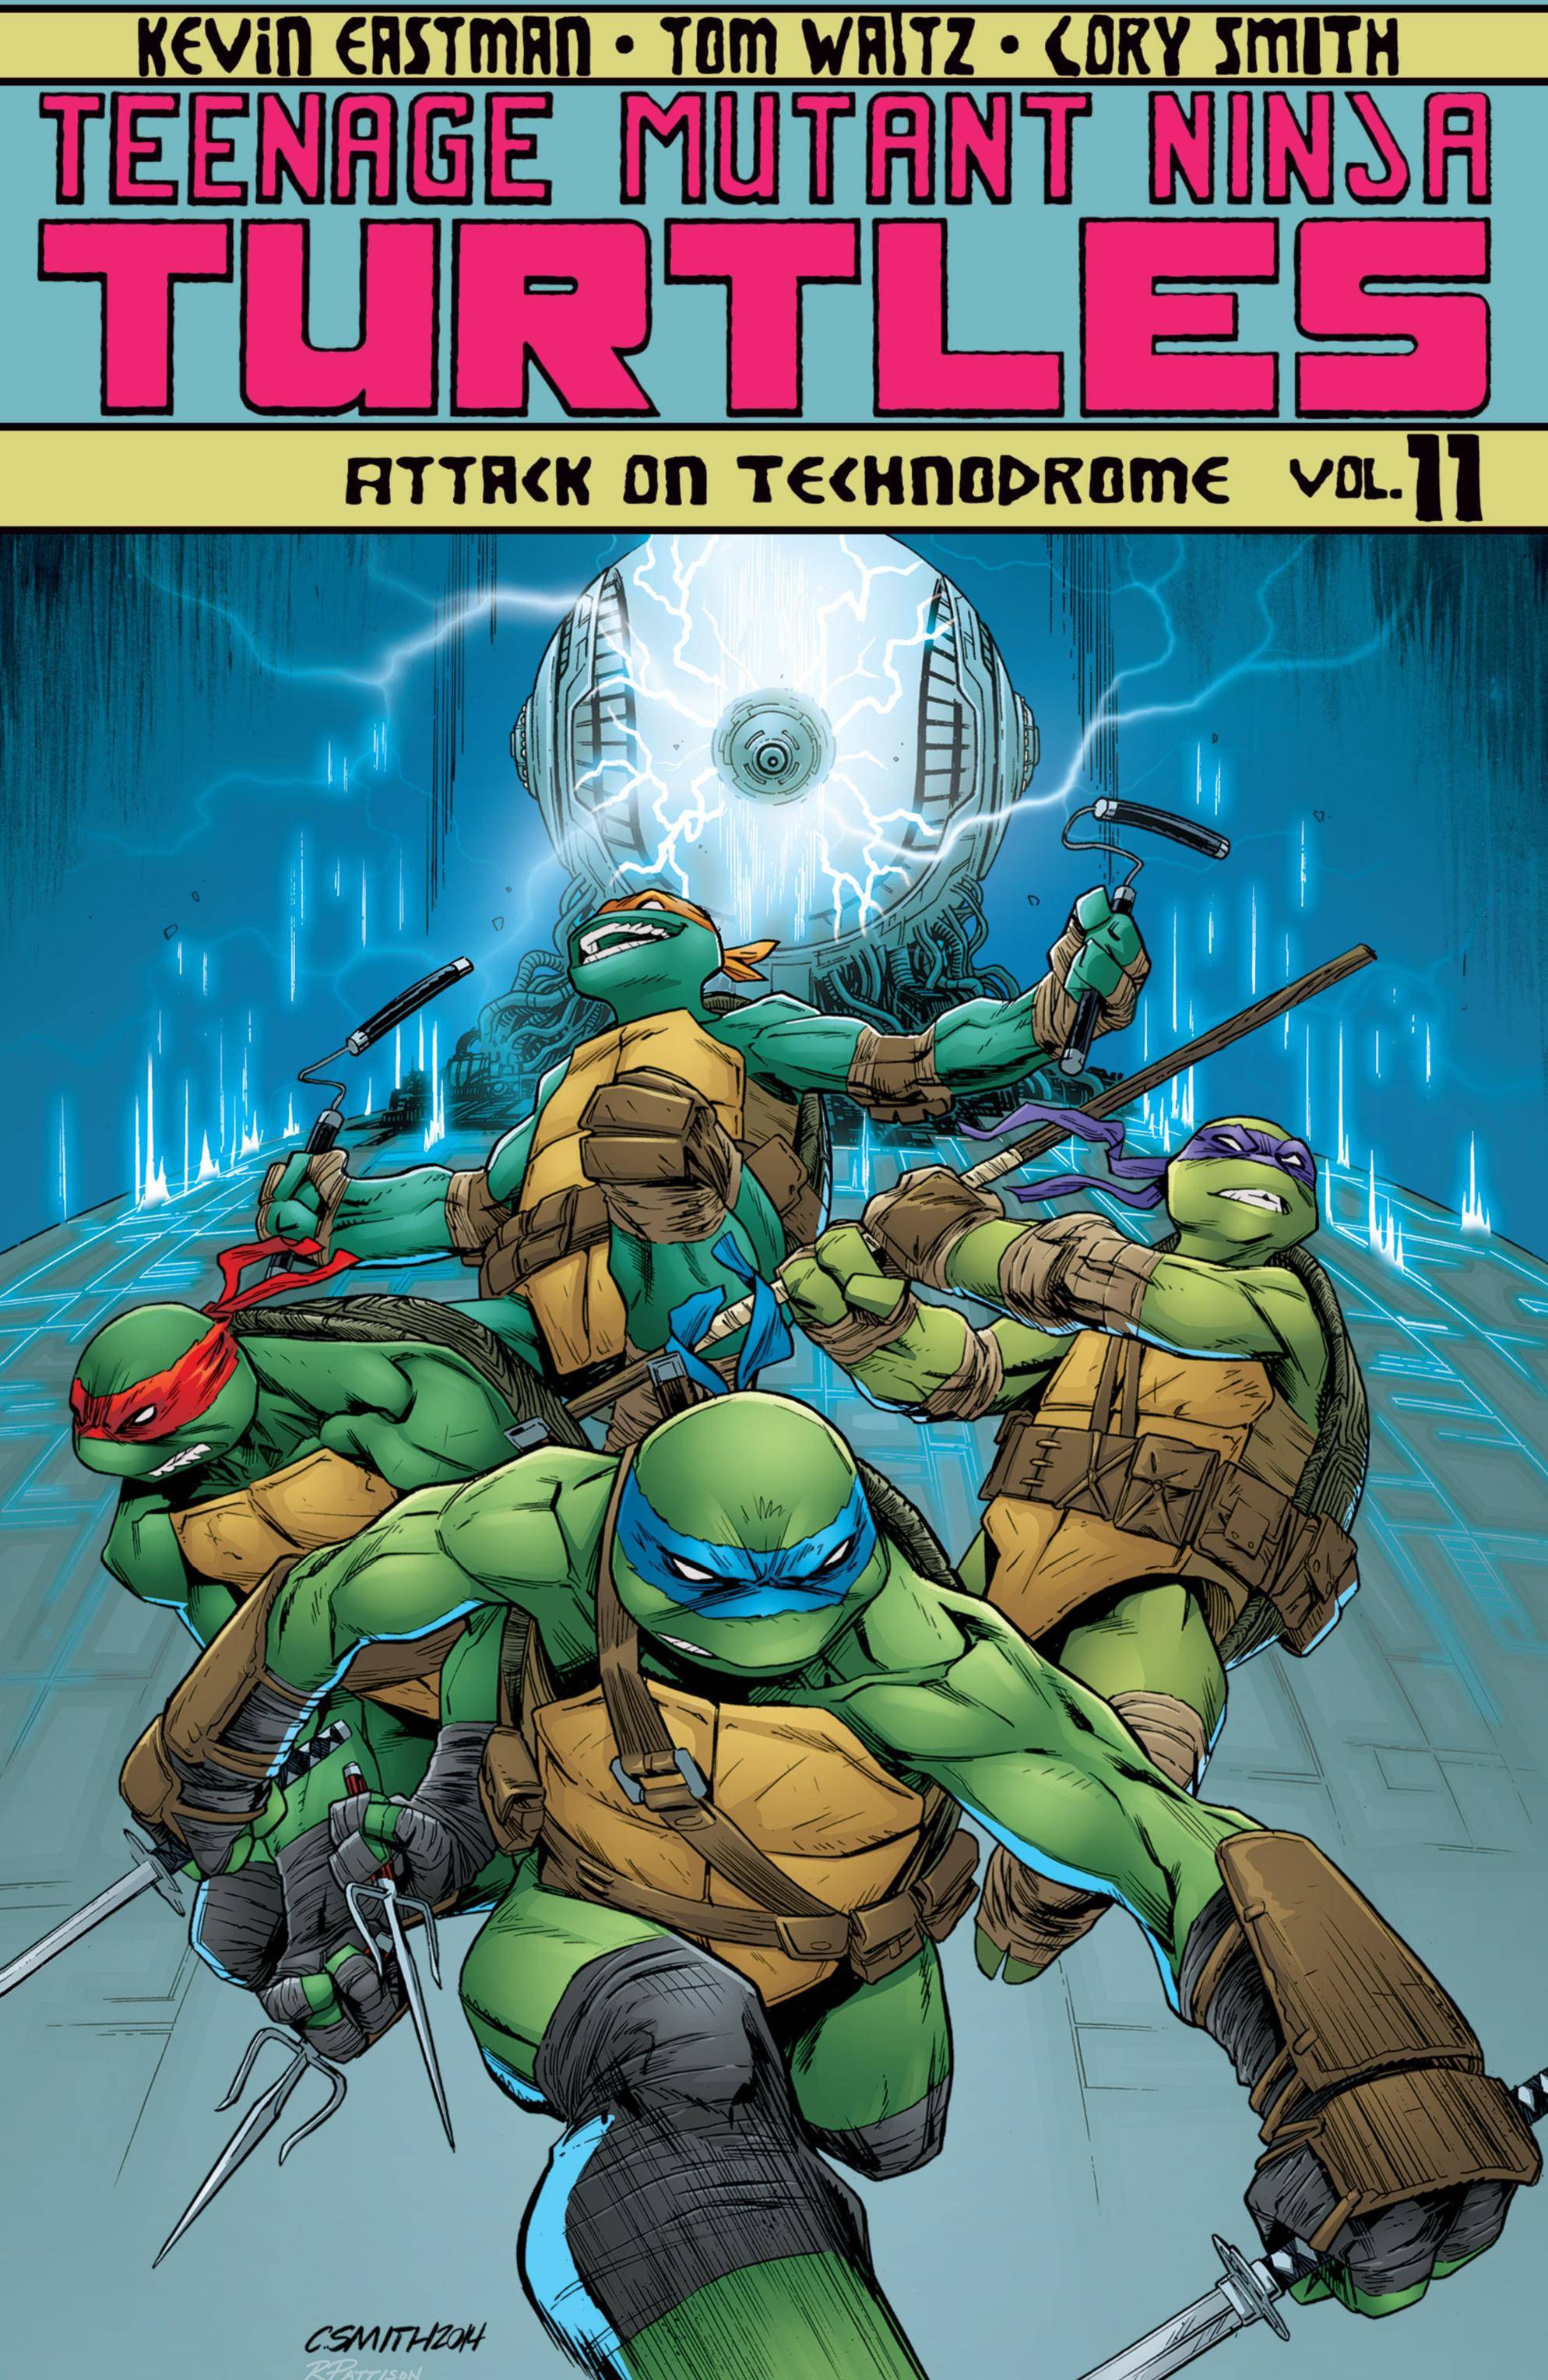 New Releases Teenage Mutant Ninja Turtles v11 - Attack On Technodrome 2015 Digital Raphael-Empire cbr